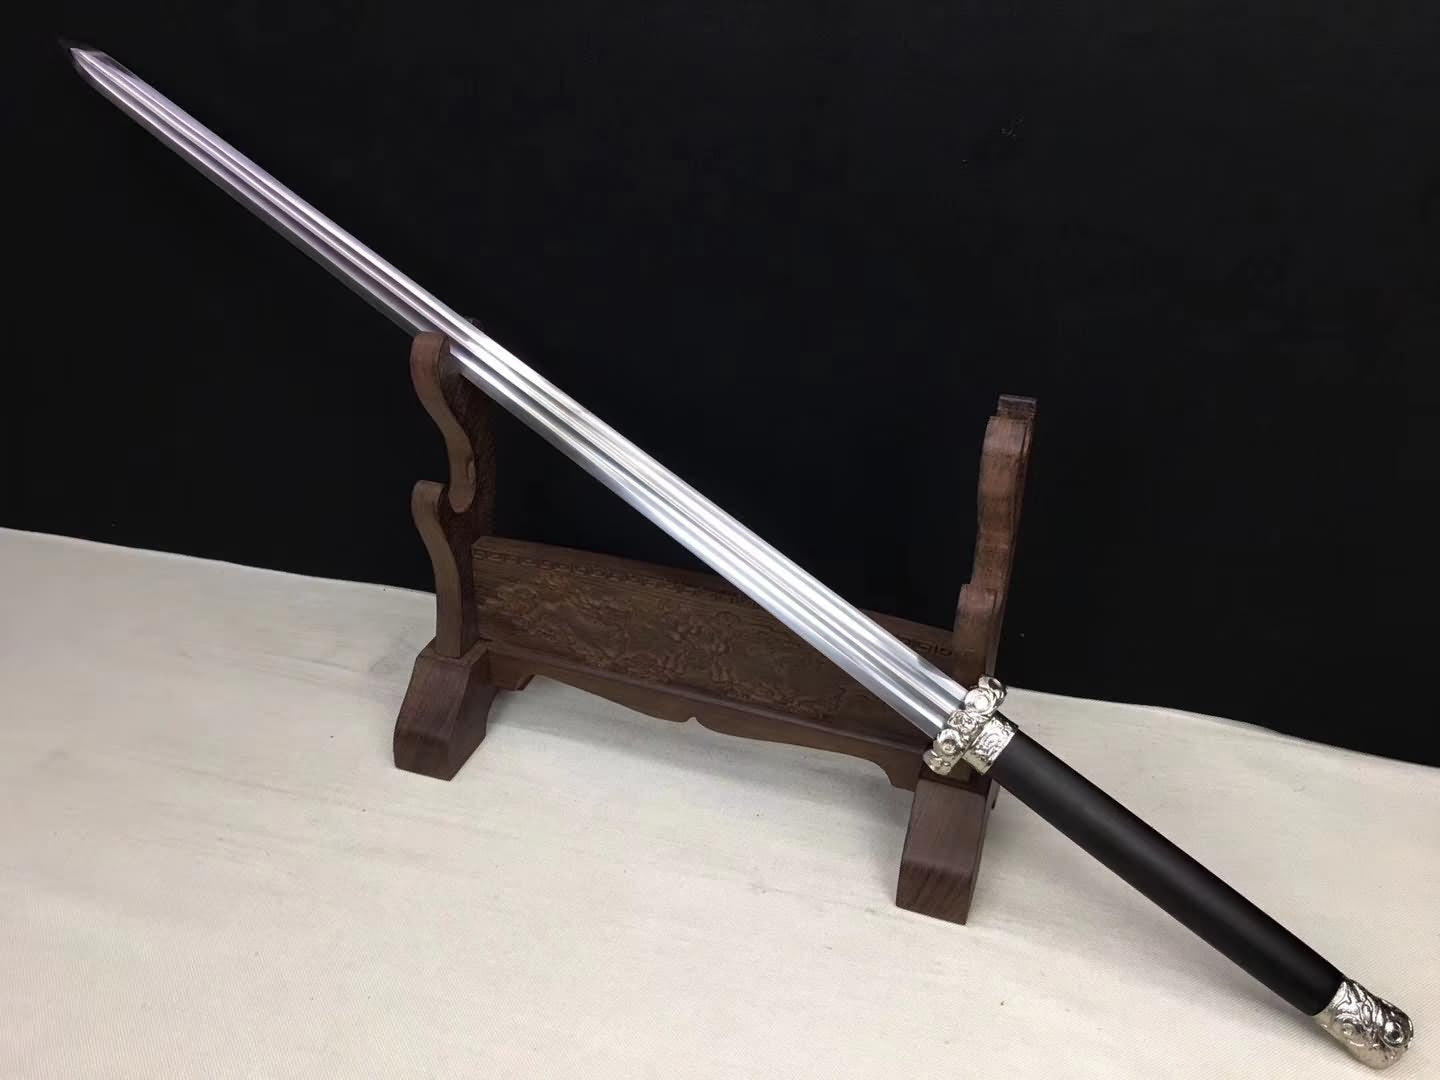 Gecko sword,Handmade art,High carbon steel blade - Chinese sword shop